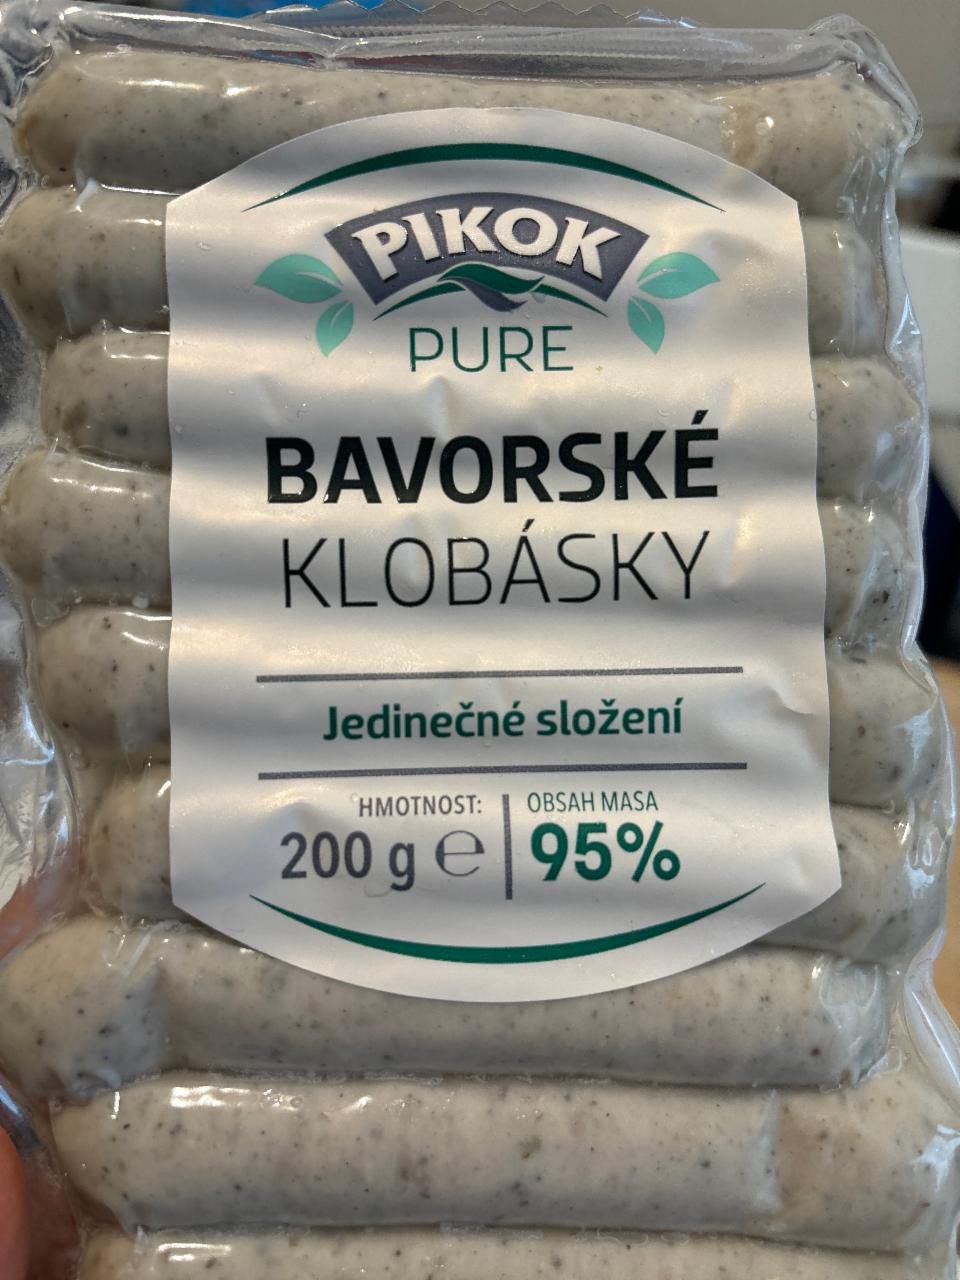 Fotografie - Bavorské klobásky 95% Pikok pure